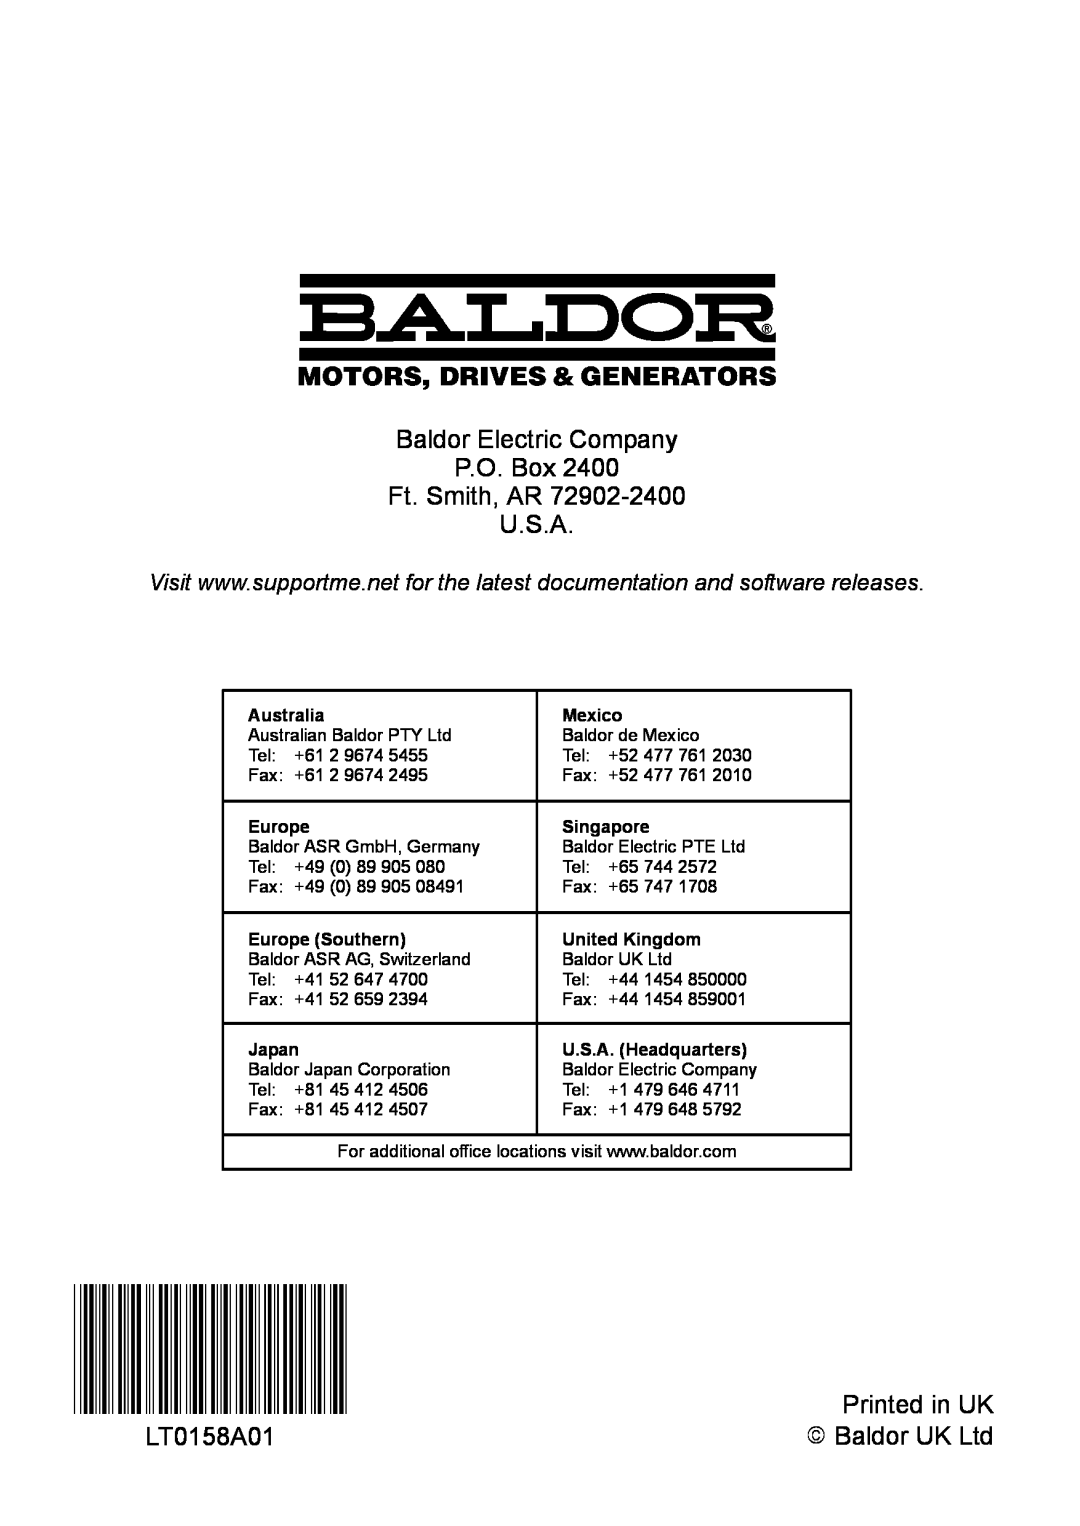 Baldor BXII Australia, Mexico, Singapore, Europe Southern, United Kingdom, Japan, U.S.A. Headquarters 